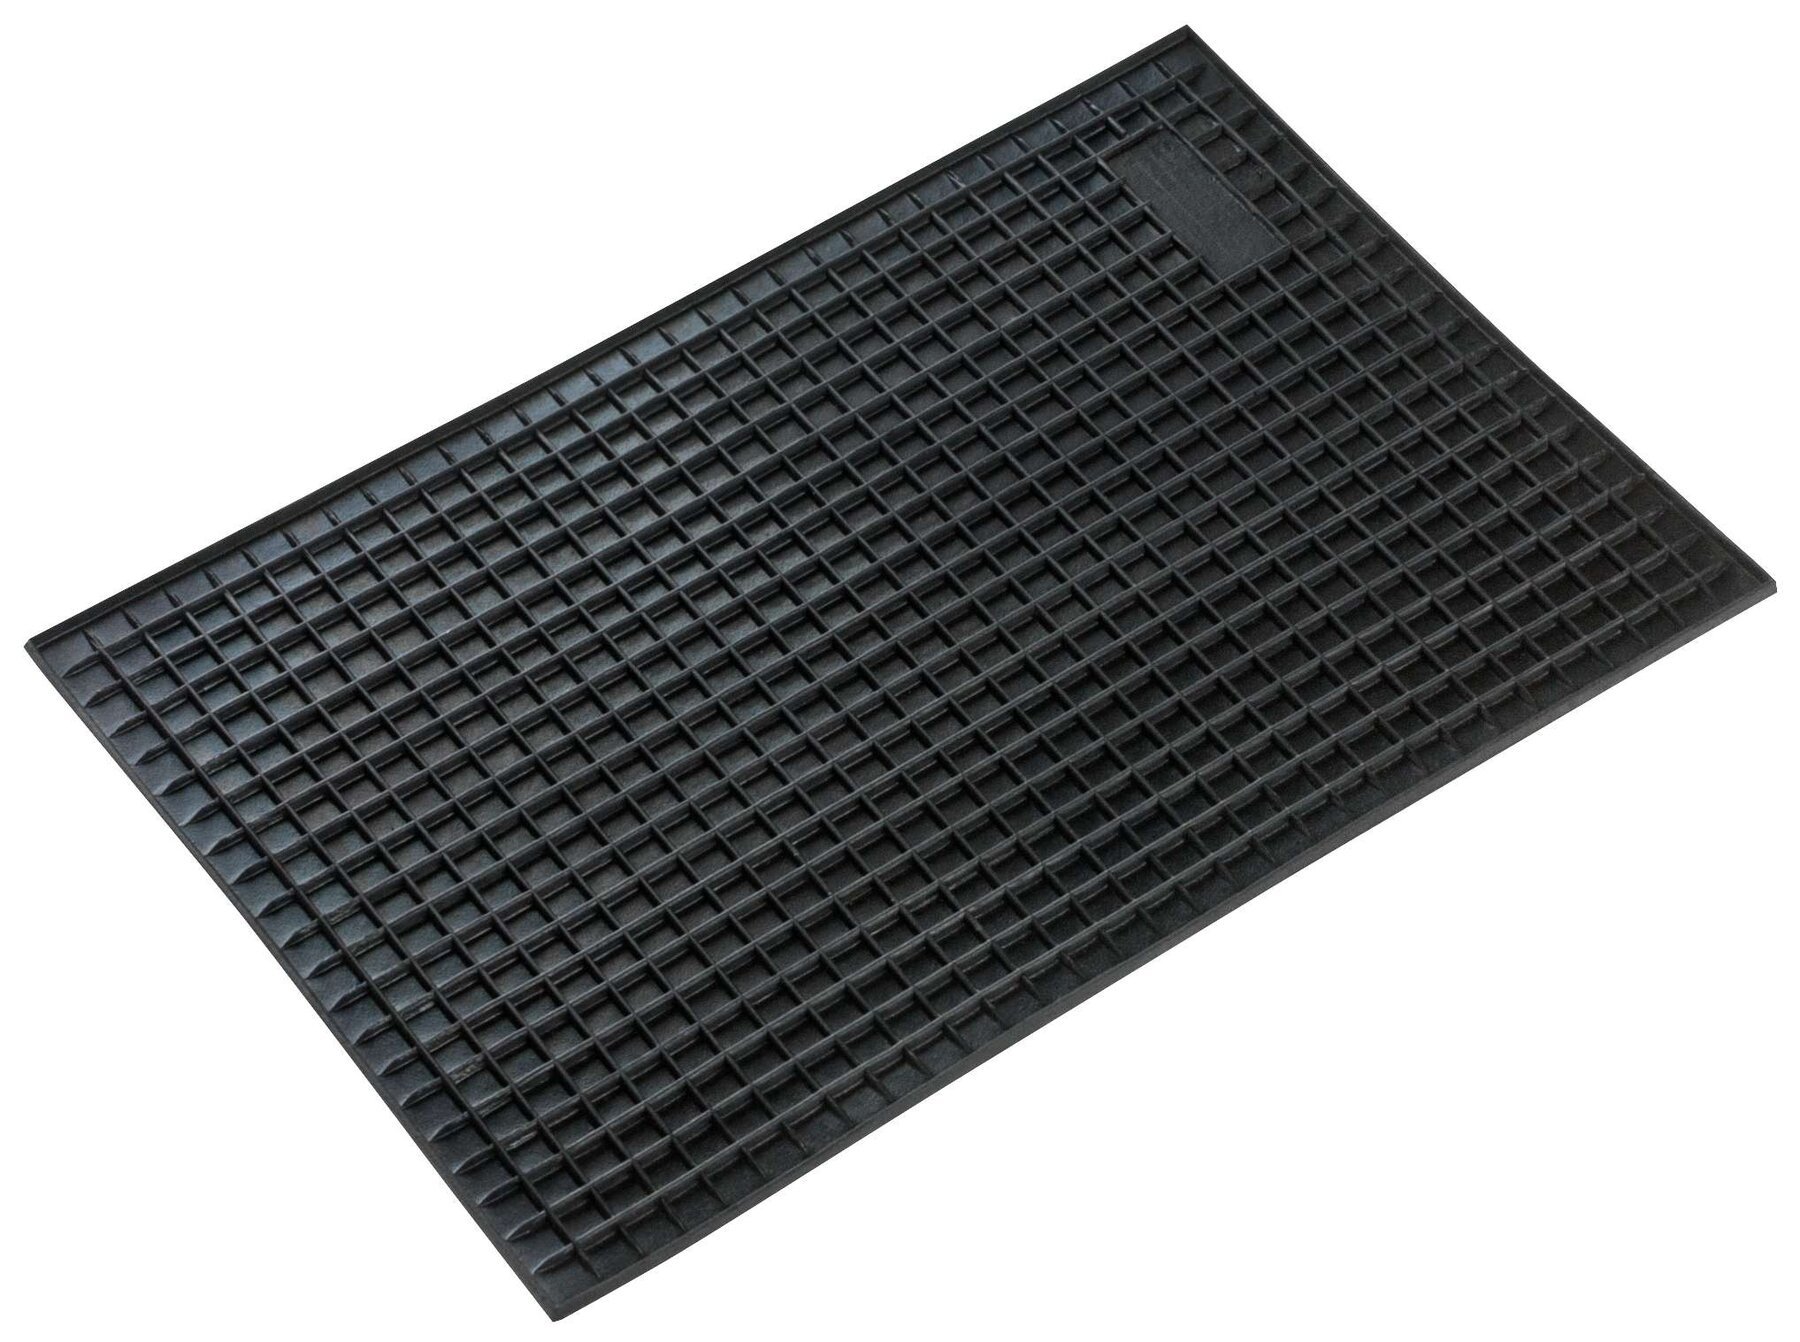 Rubber mats rectangle ca. 42x28 cm black